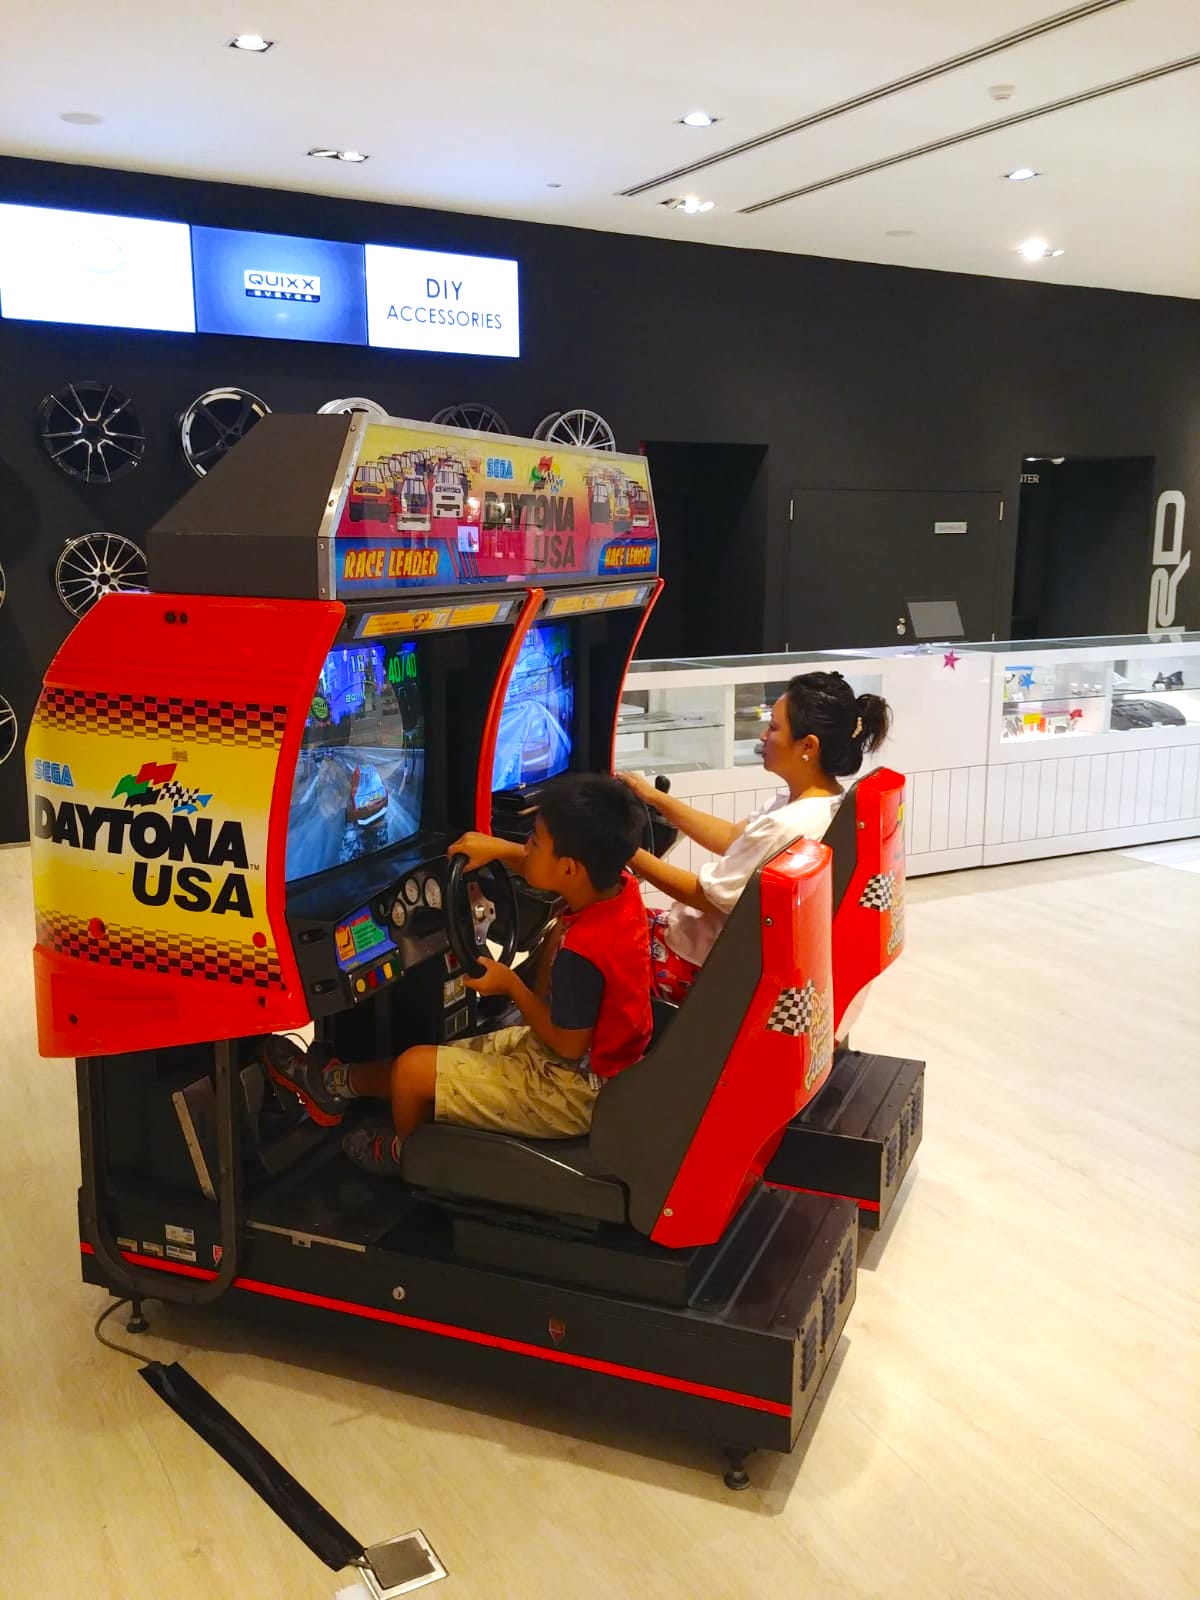 Daytona Arcade Games Rental